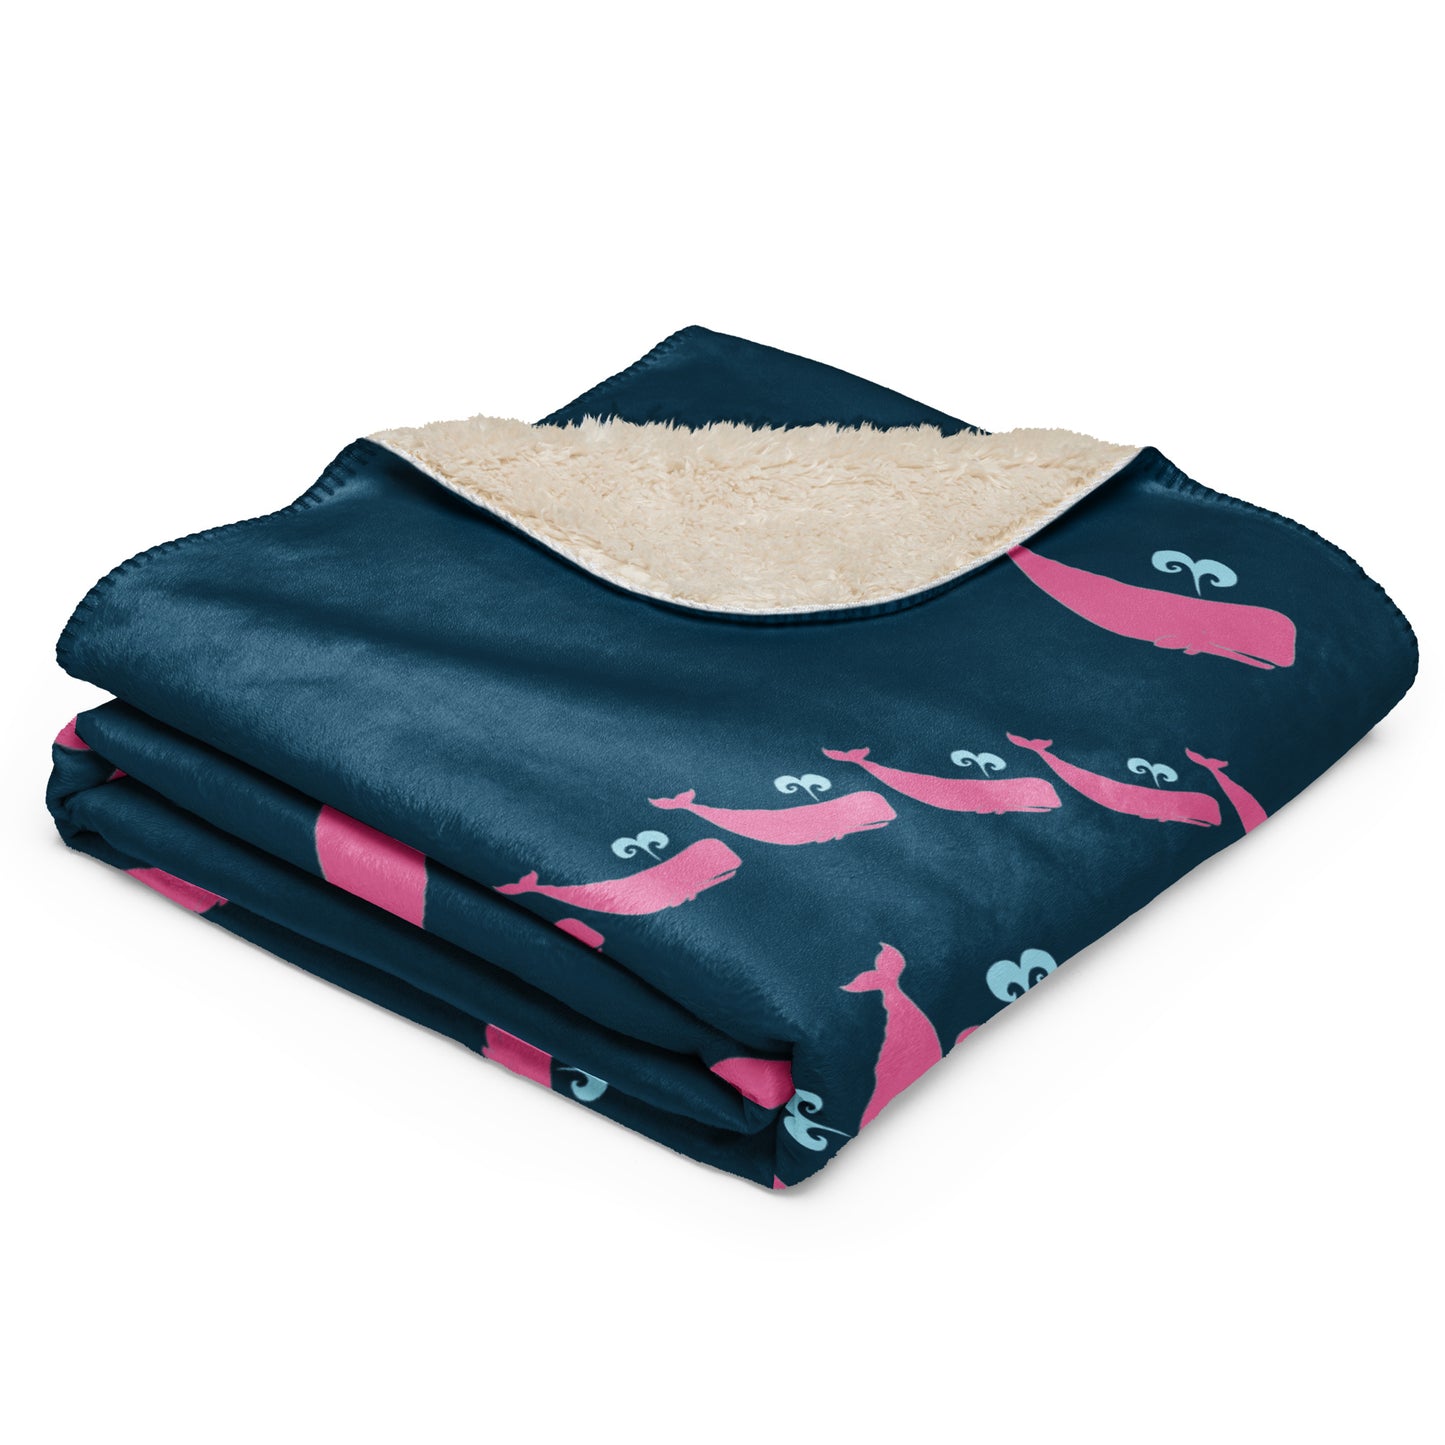 Sperm Whale Sherpa blanket - Pink on Navy